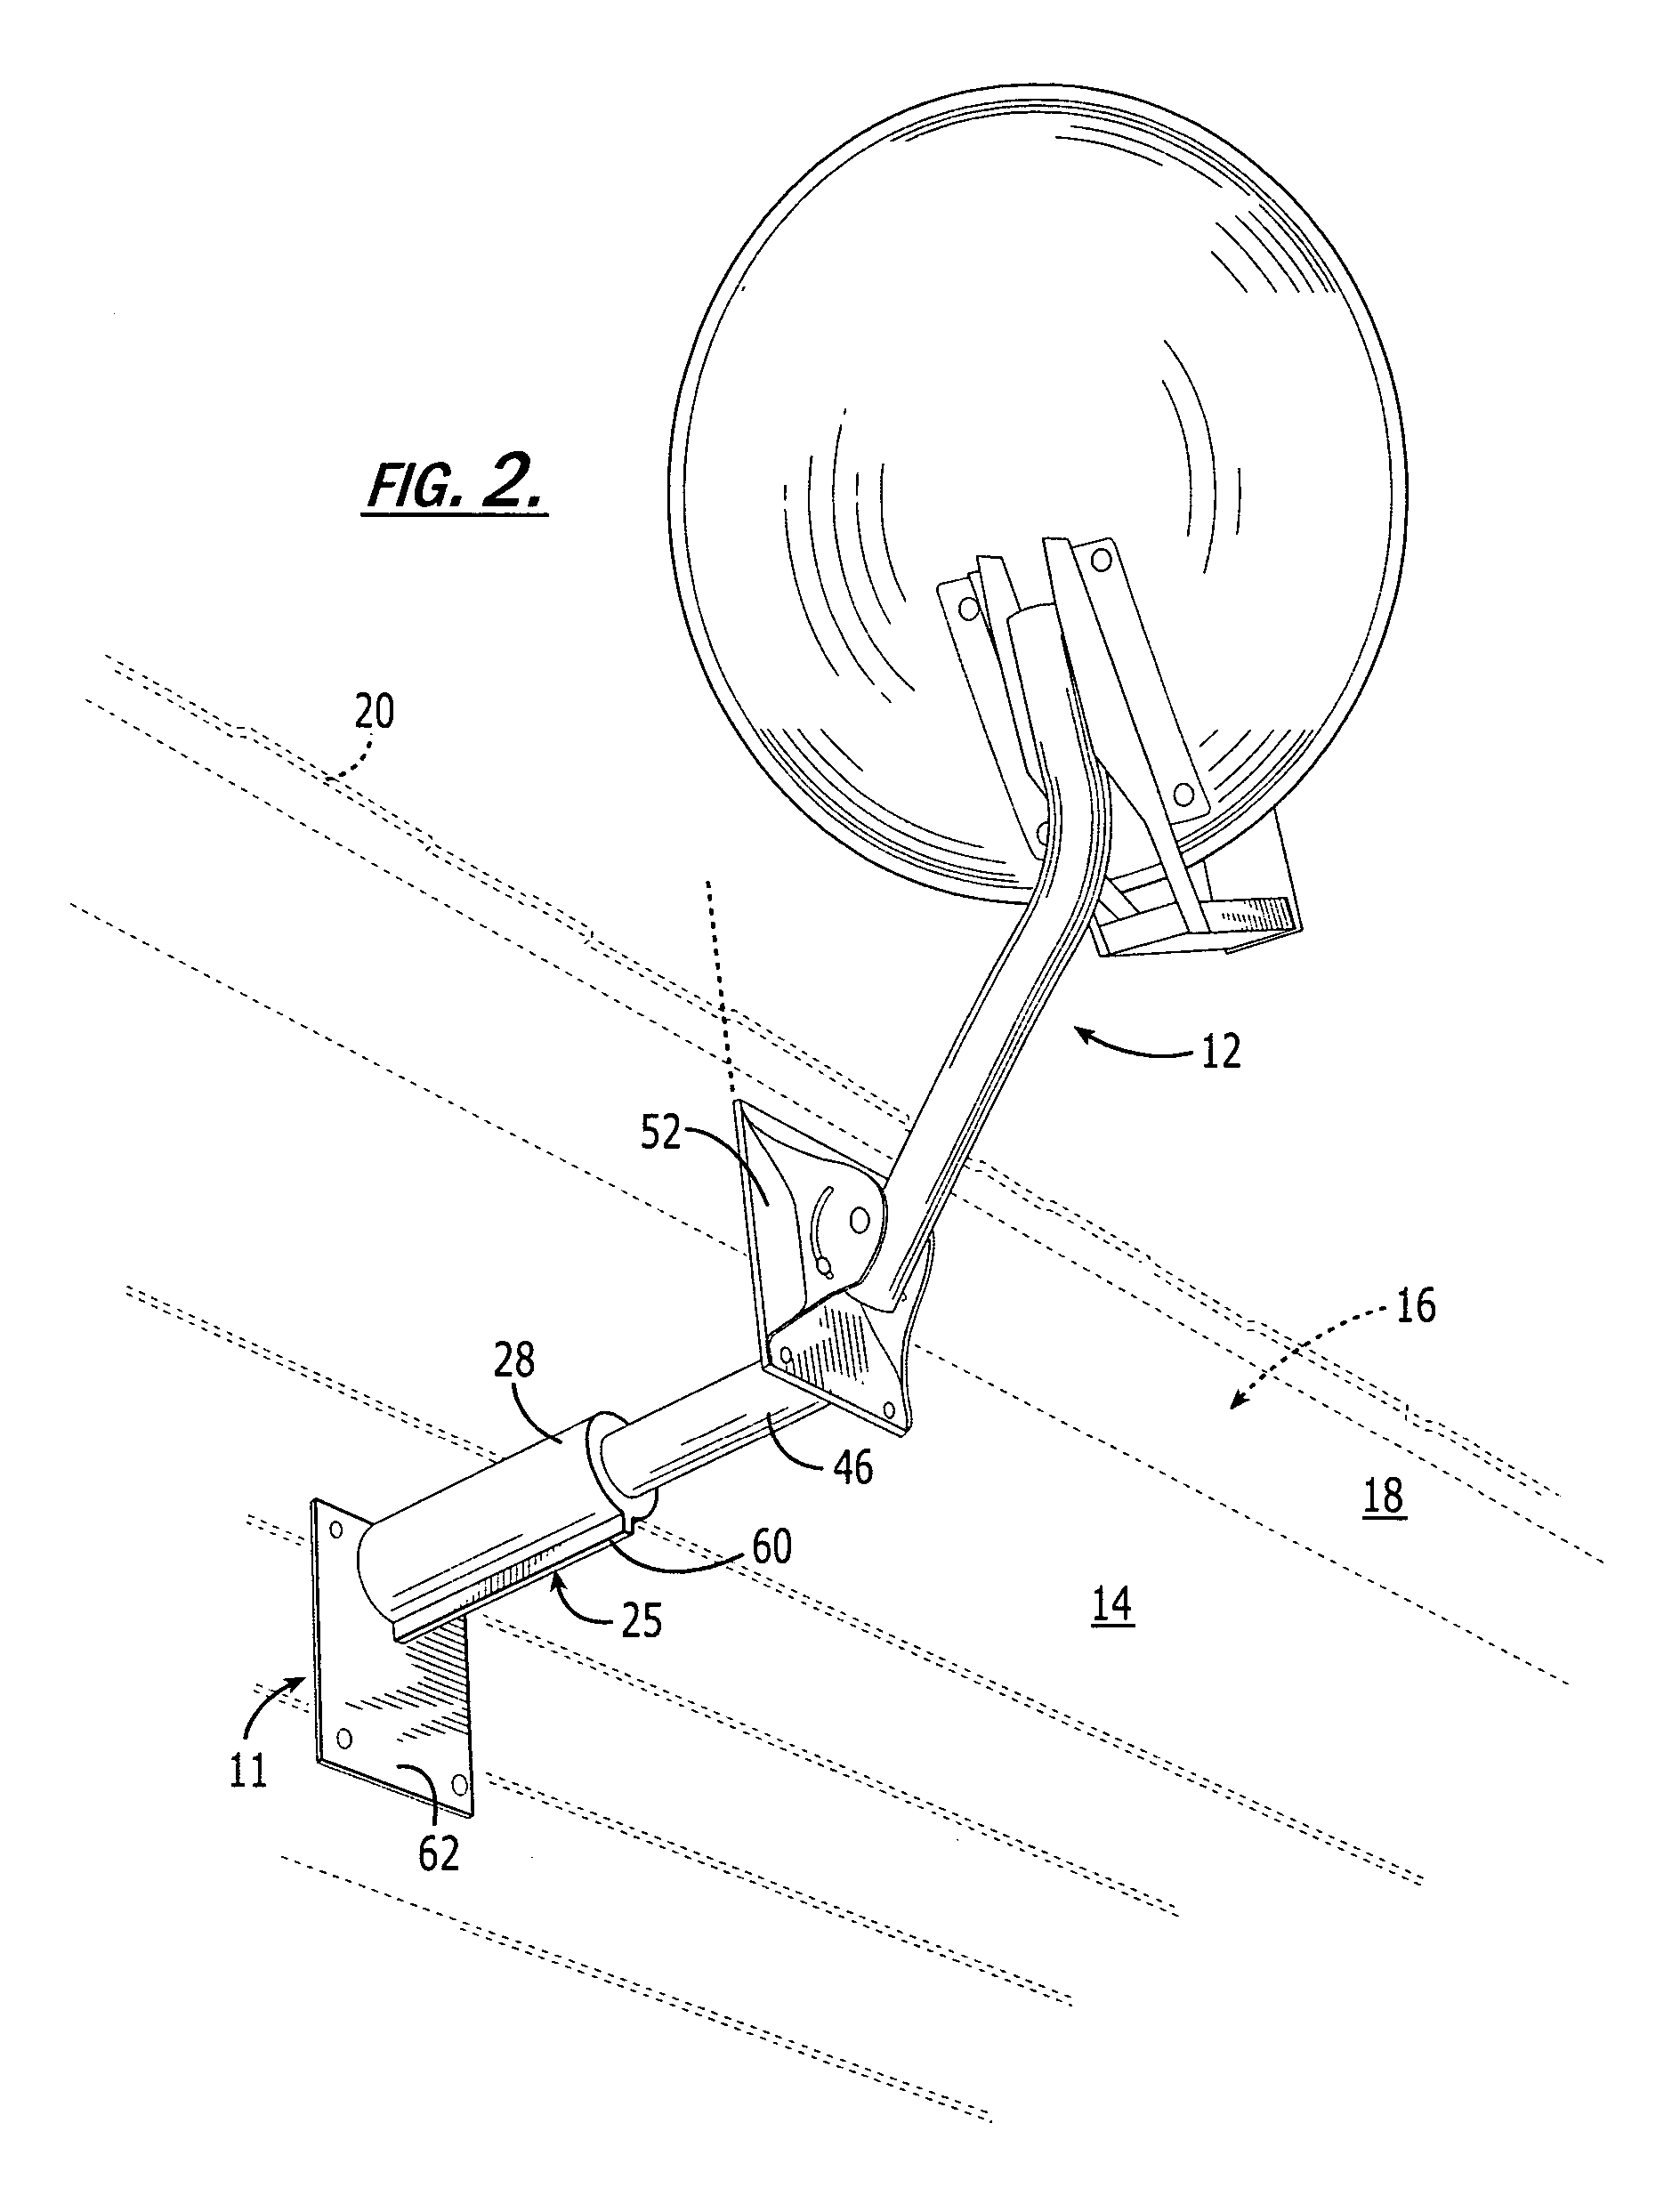 Satellite antenna mounting apparatus and method